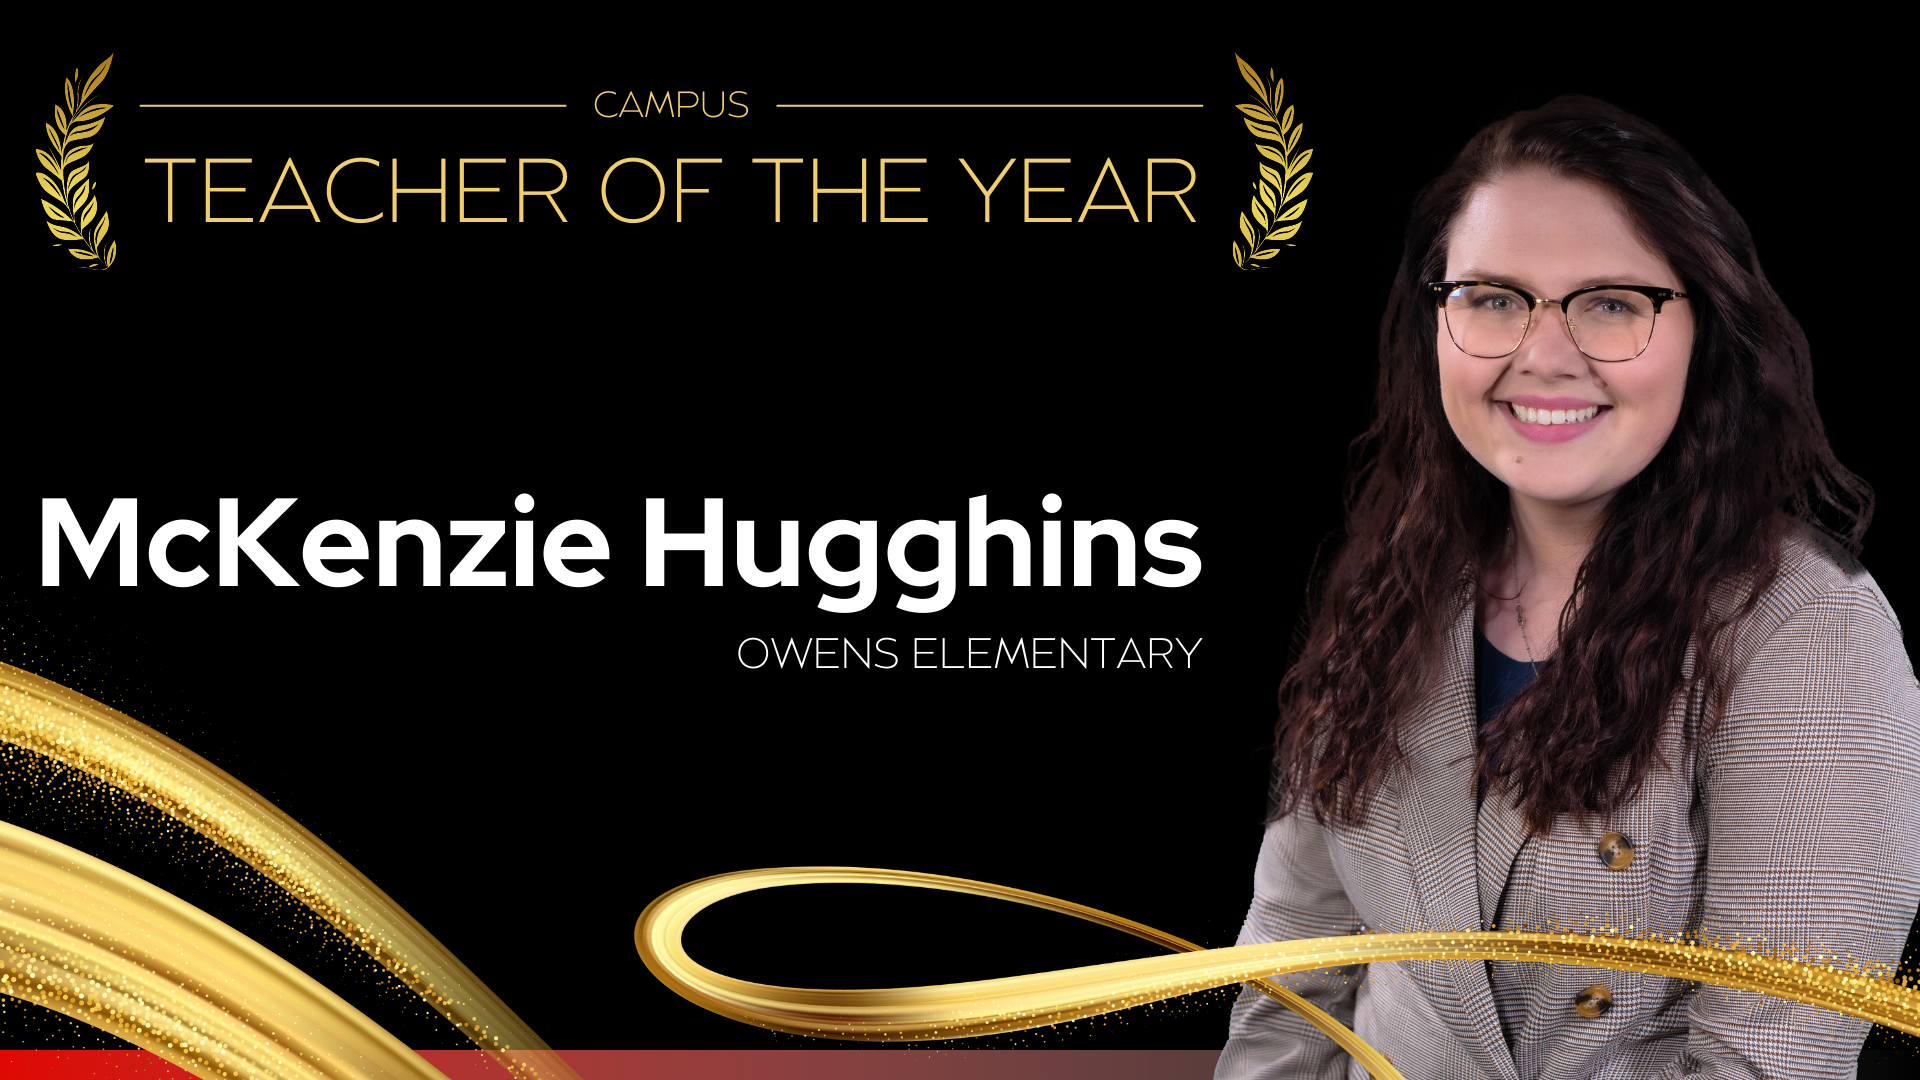 Campus Teacher of the Year Owens Elementary School - McKenzie Hugghins           